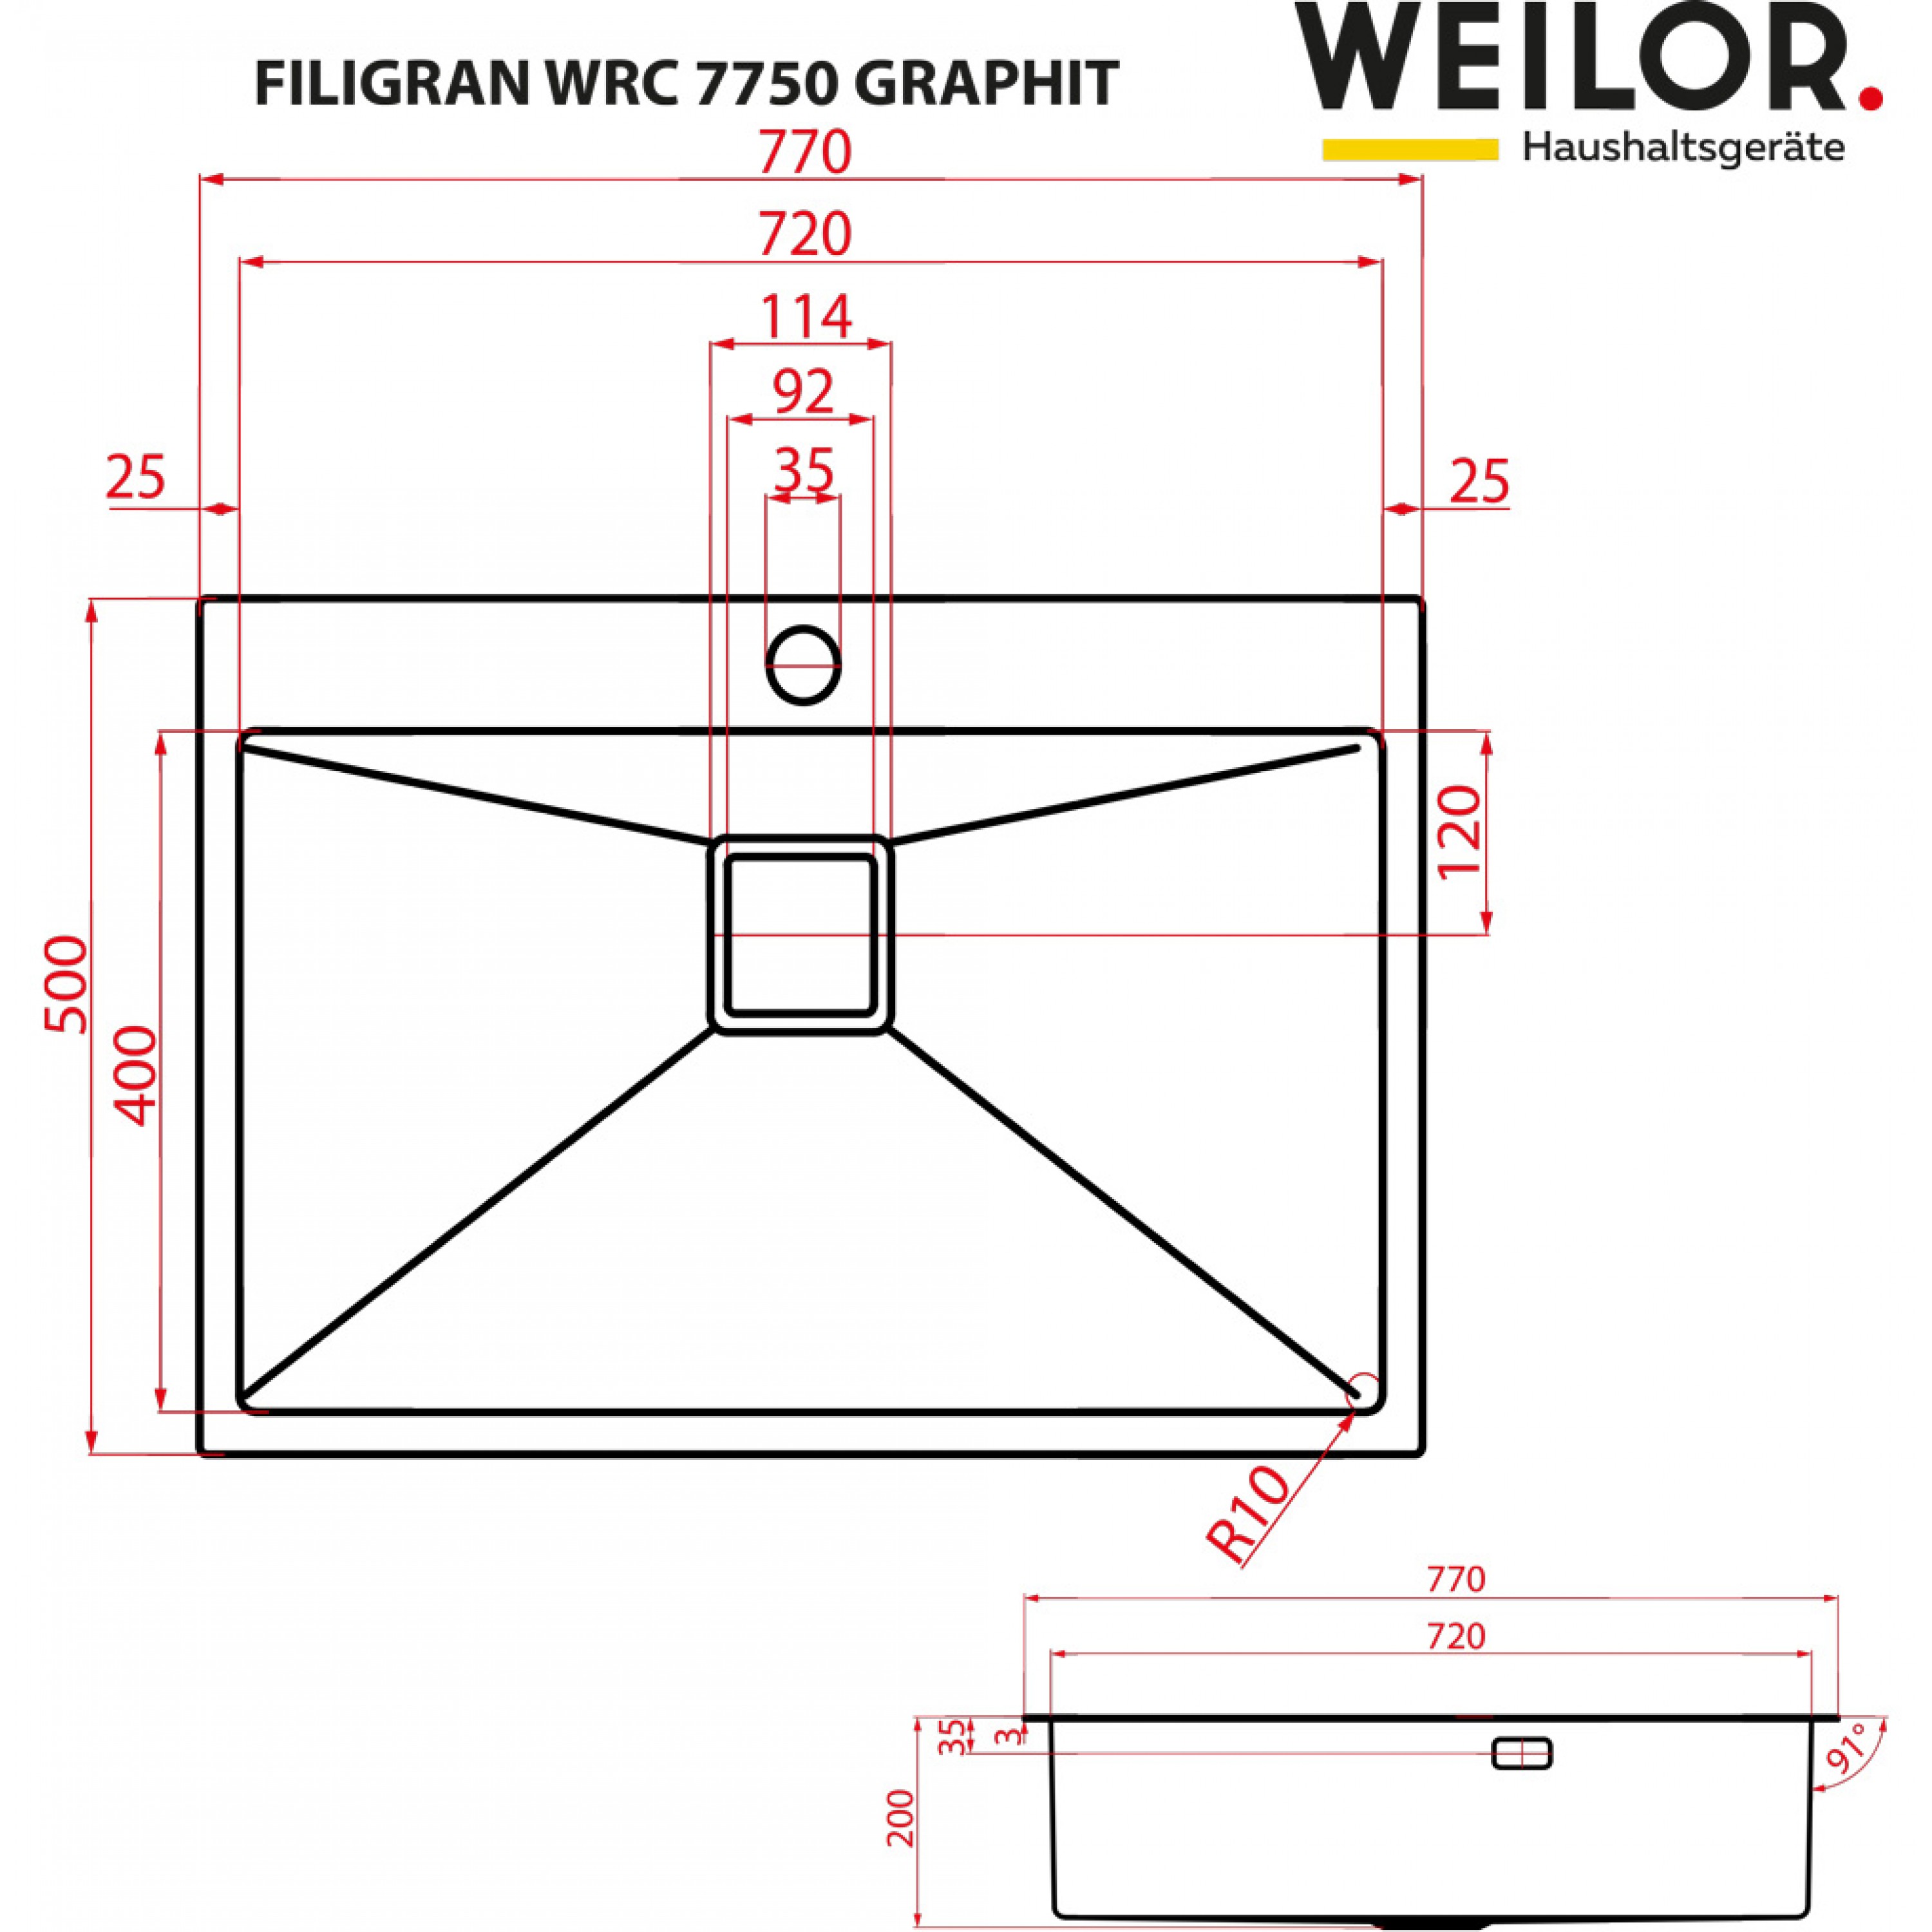 Weilor FILIGRAN WRC 7750 GRAPHIT Габаритные размеры